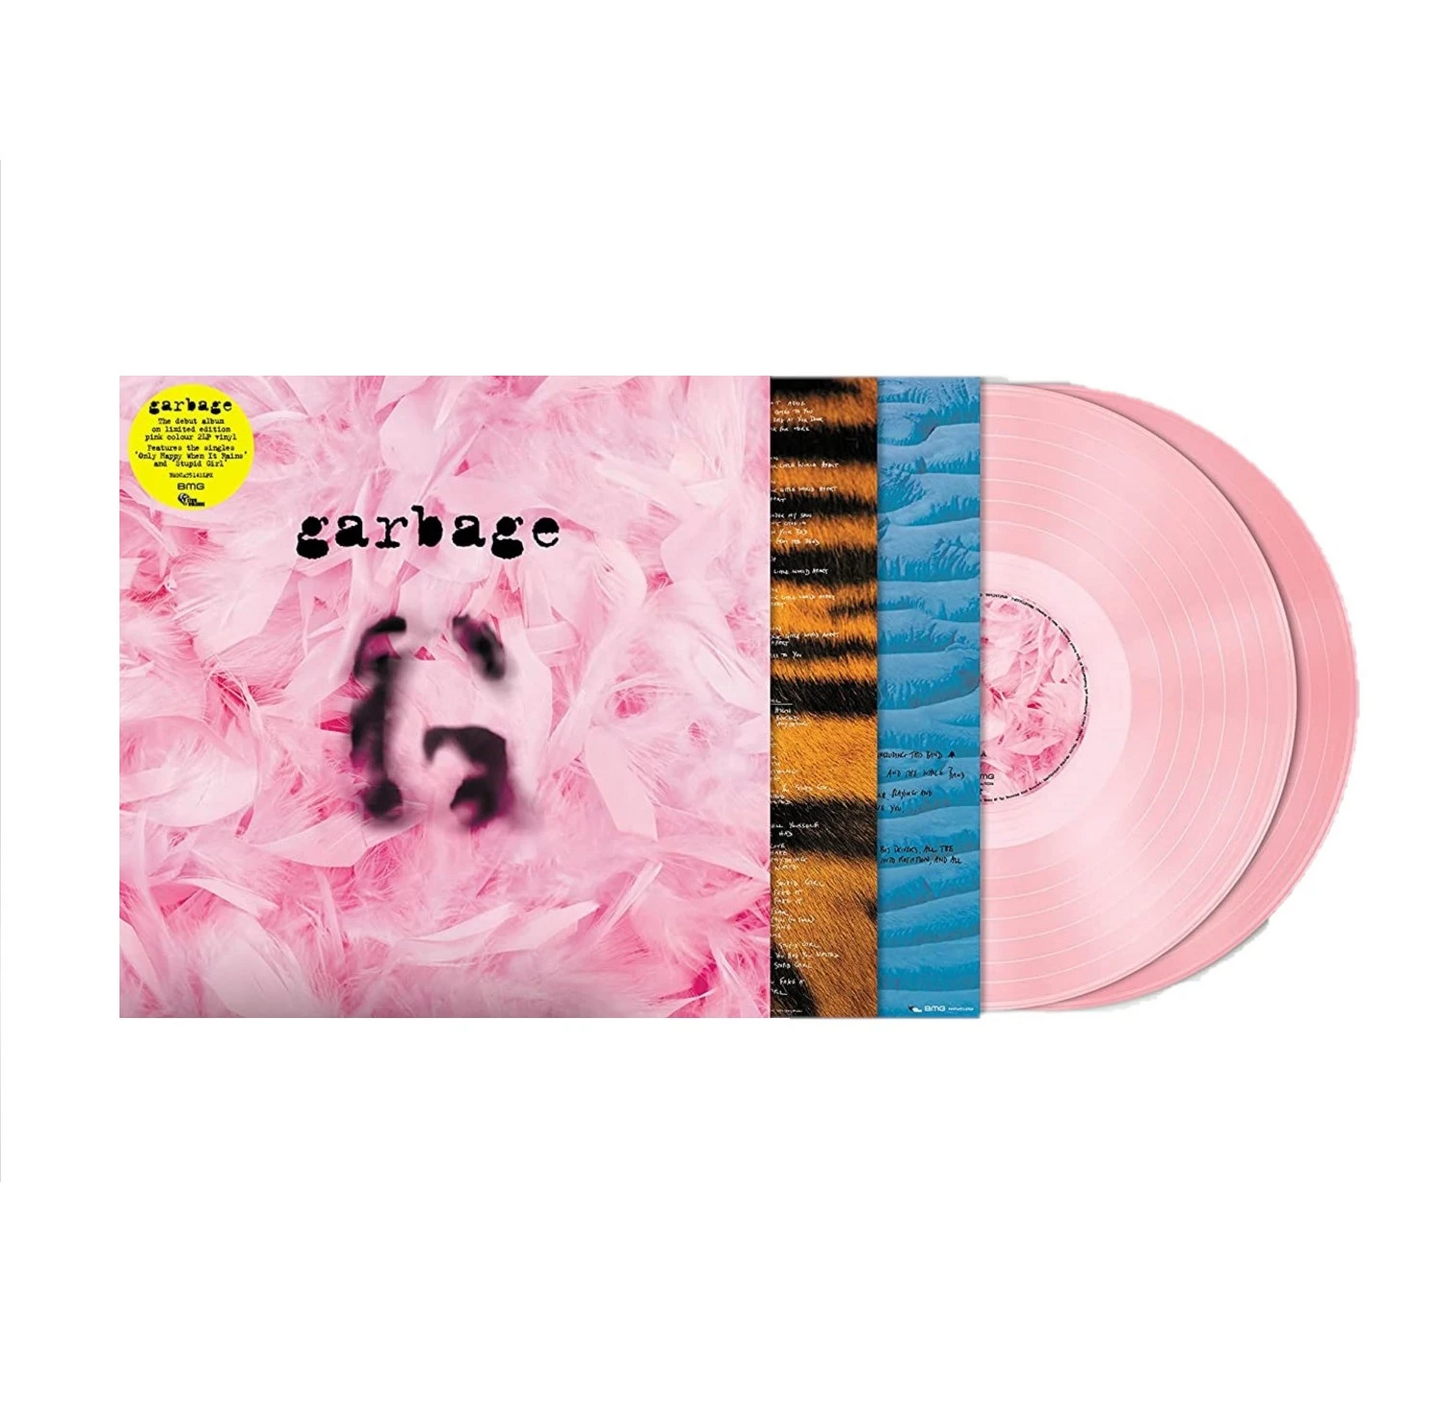 Garbage - Garbage 2LP (Pink Vinyl, 45RPM, gatefold, limited, import)